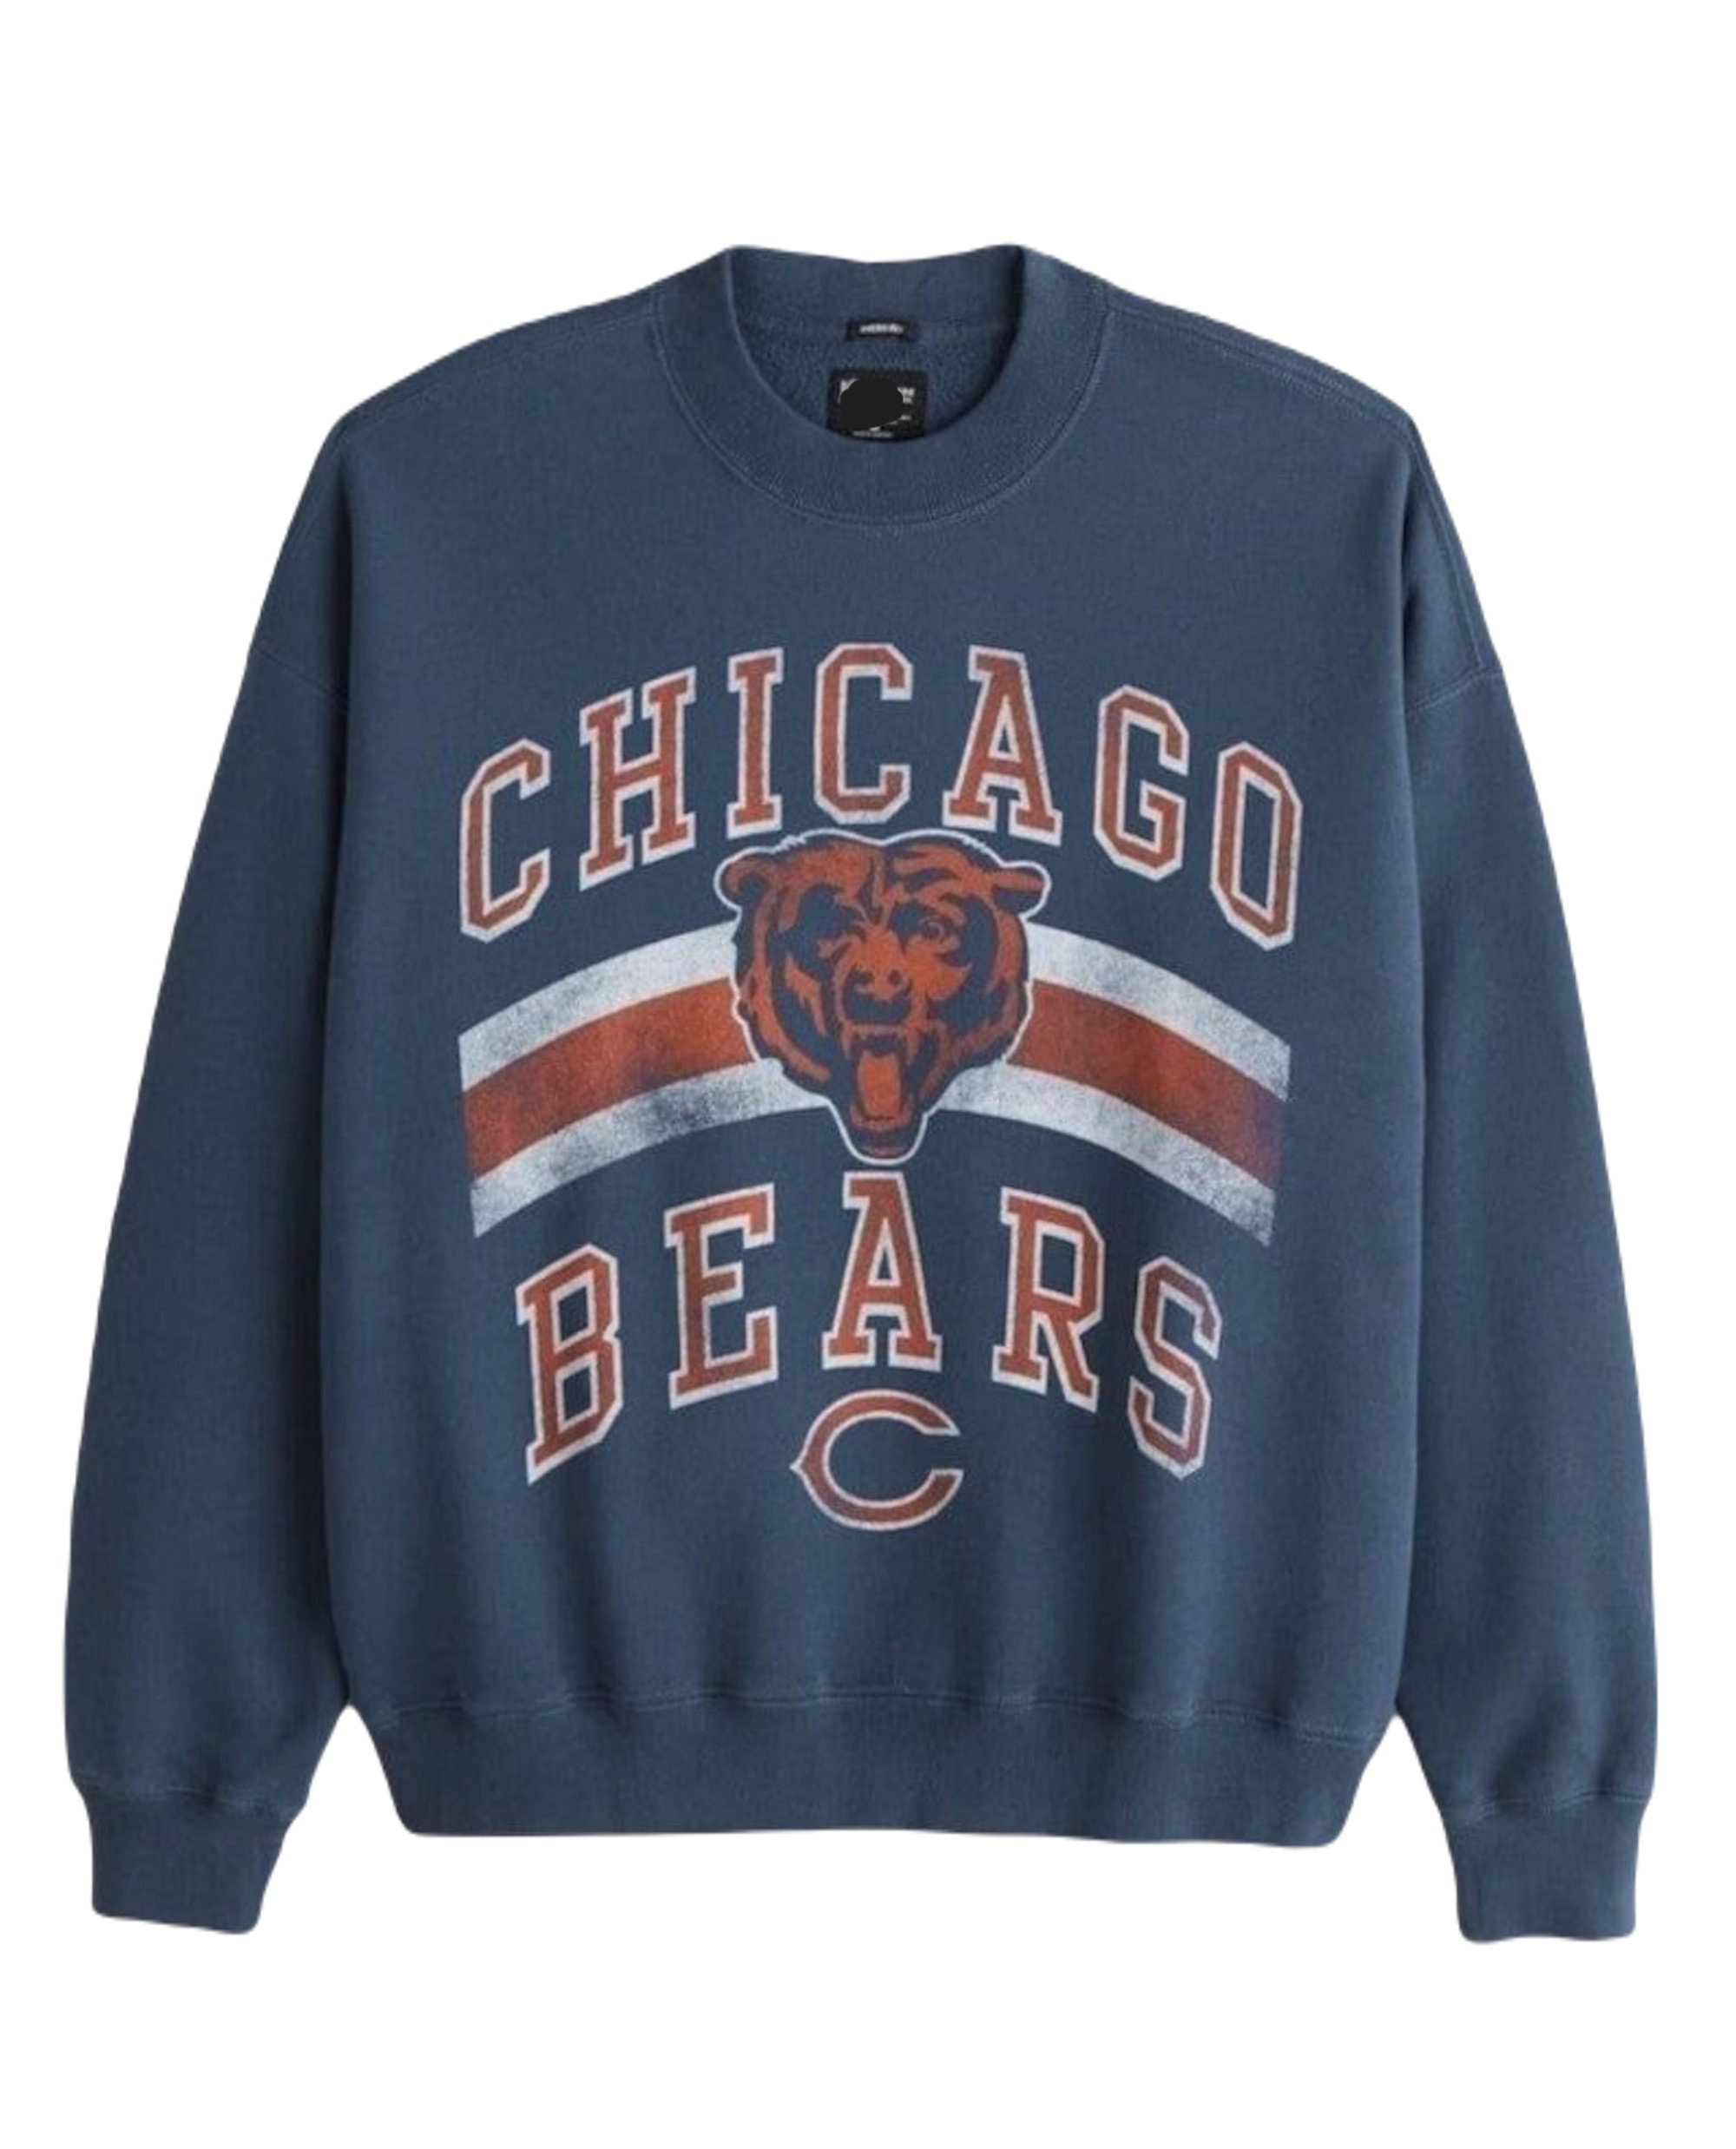 Vintage Chicago Bears Gear & Throwback Apparel - Clark Street Sports